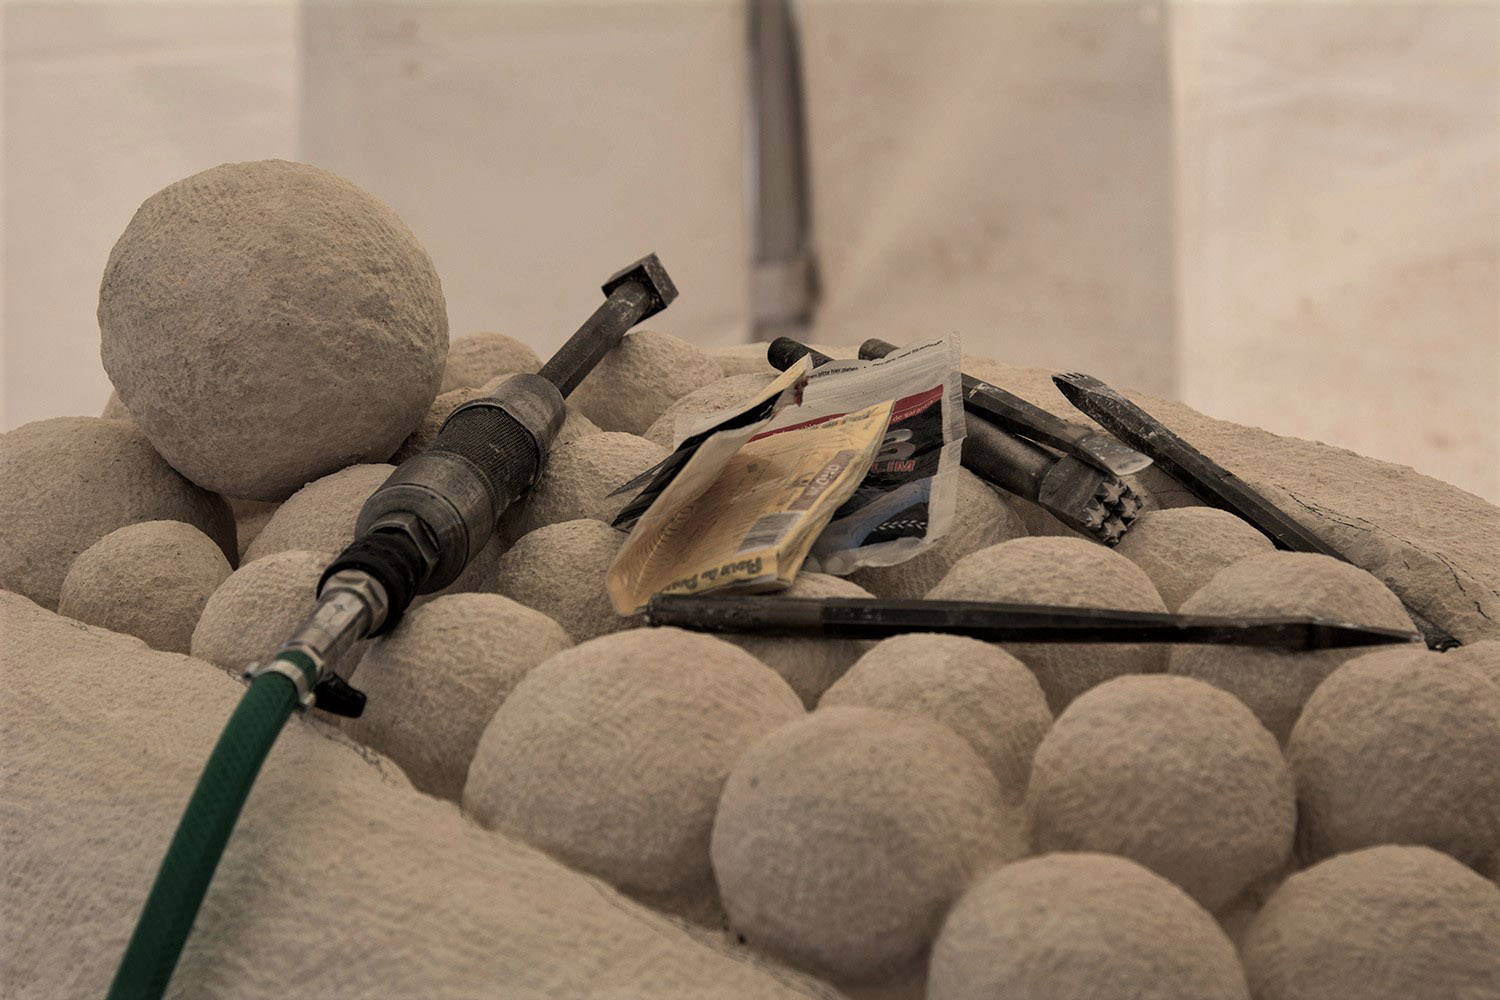 Emanuela Camacci working at Papaya stone sculpture